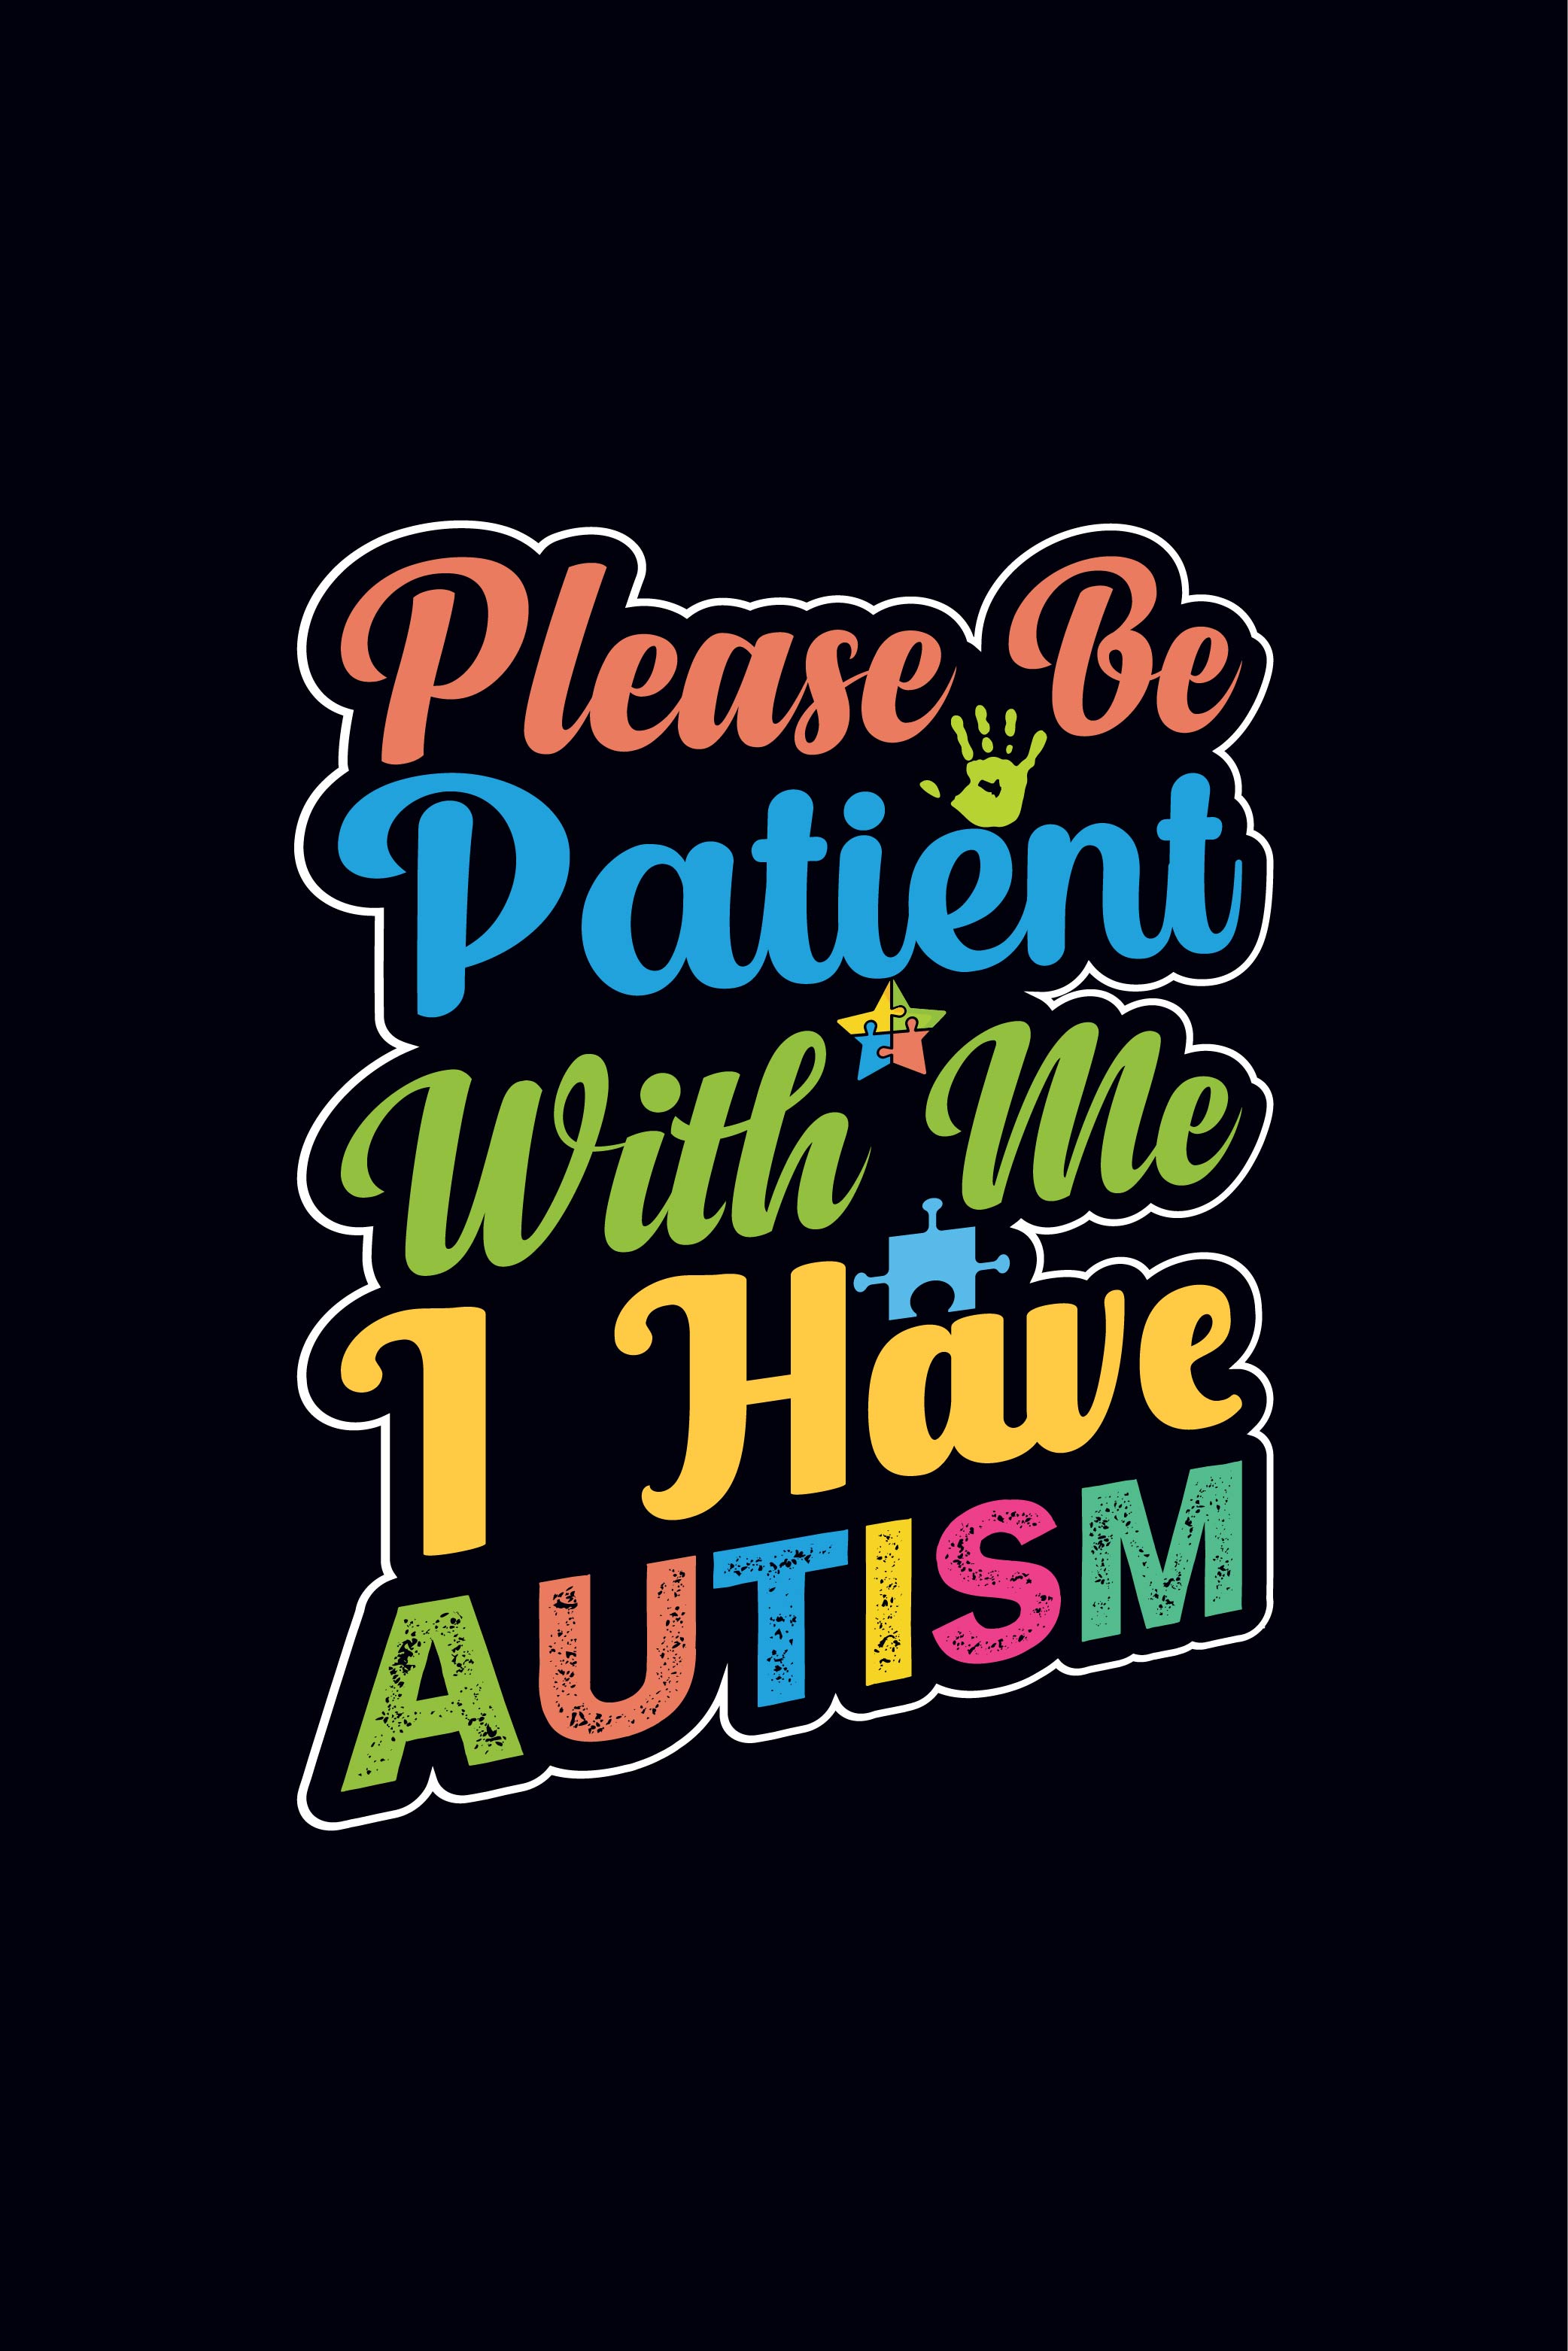 Please be patient with me, I have Autism Autism t-shirt design template pinterest preview image.